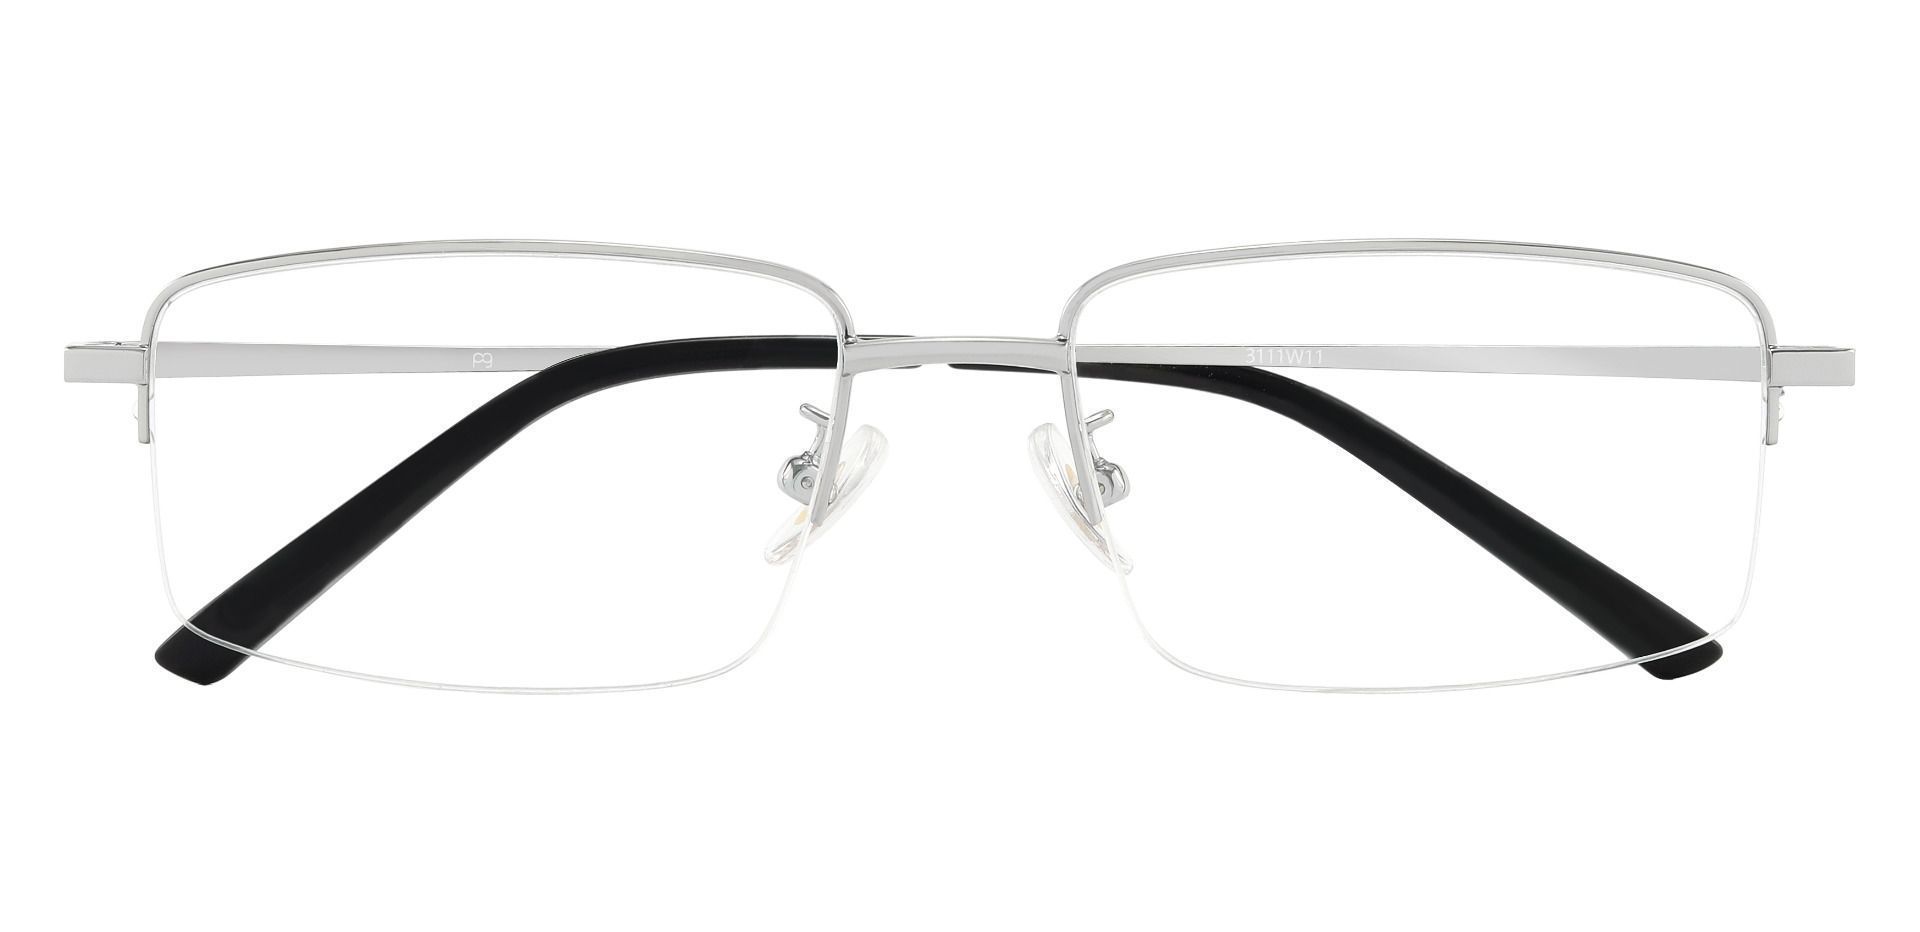 Wayne Rectangle Lined Bifocal Glasses - Silver